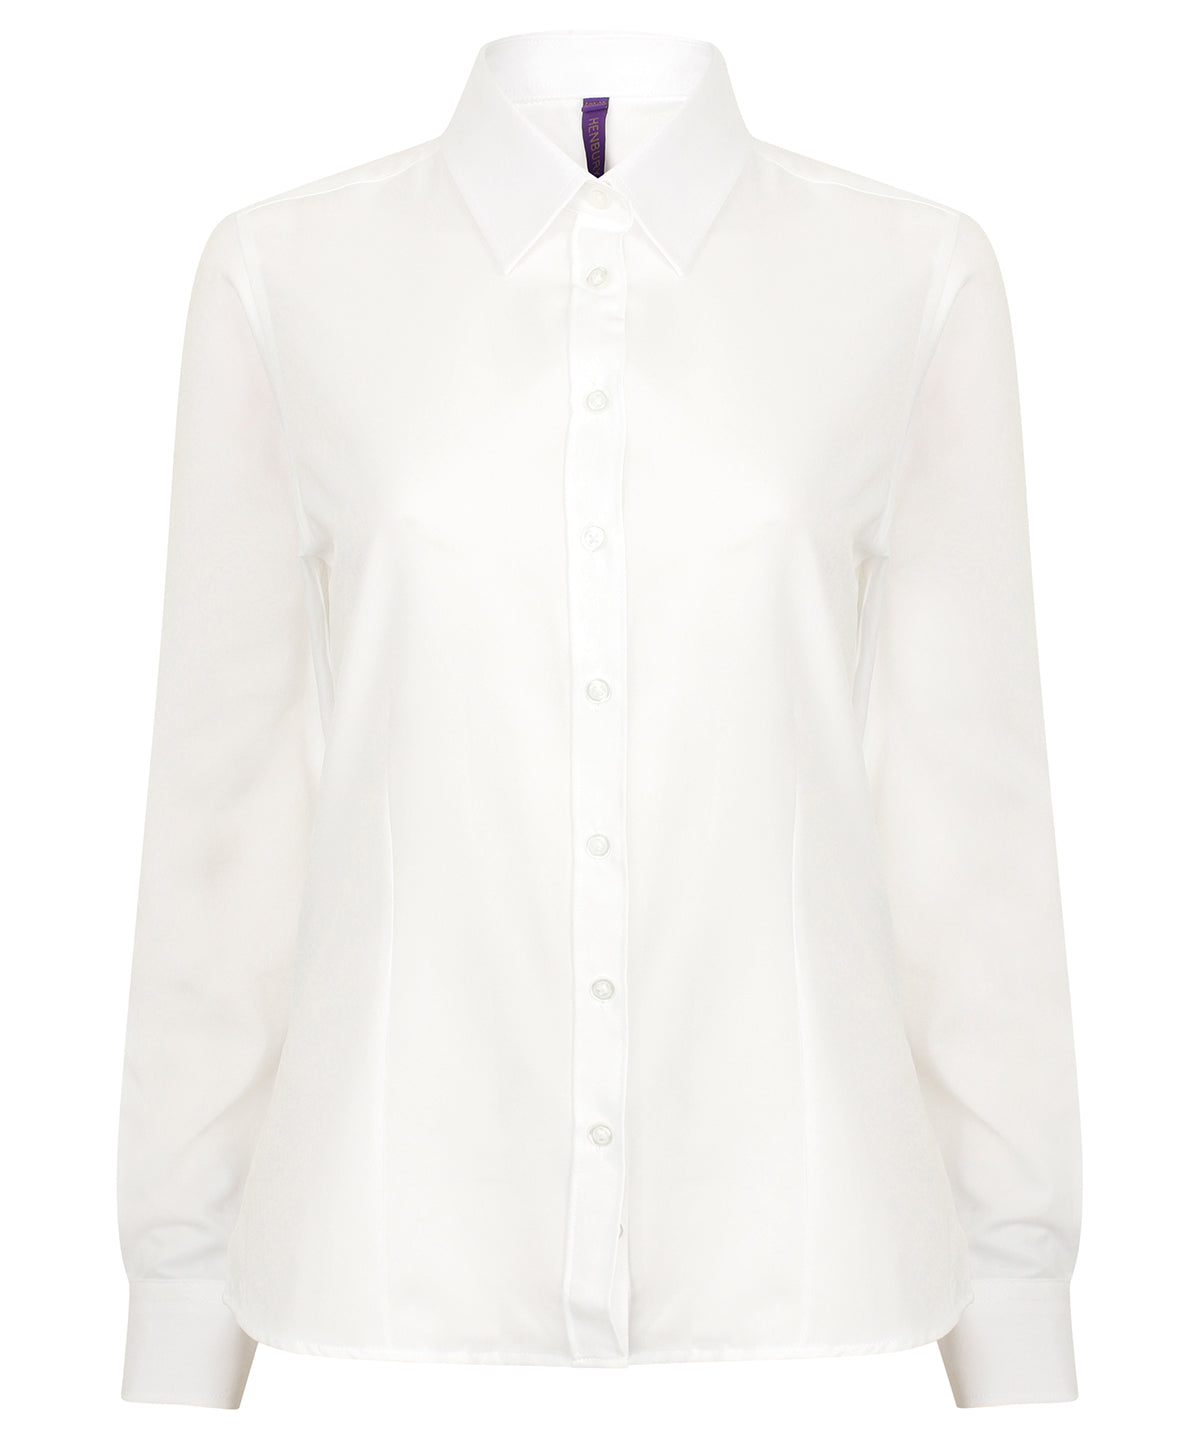 Bolir - Women's Wicking Antibacterial Long Sleeve Shirt